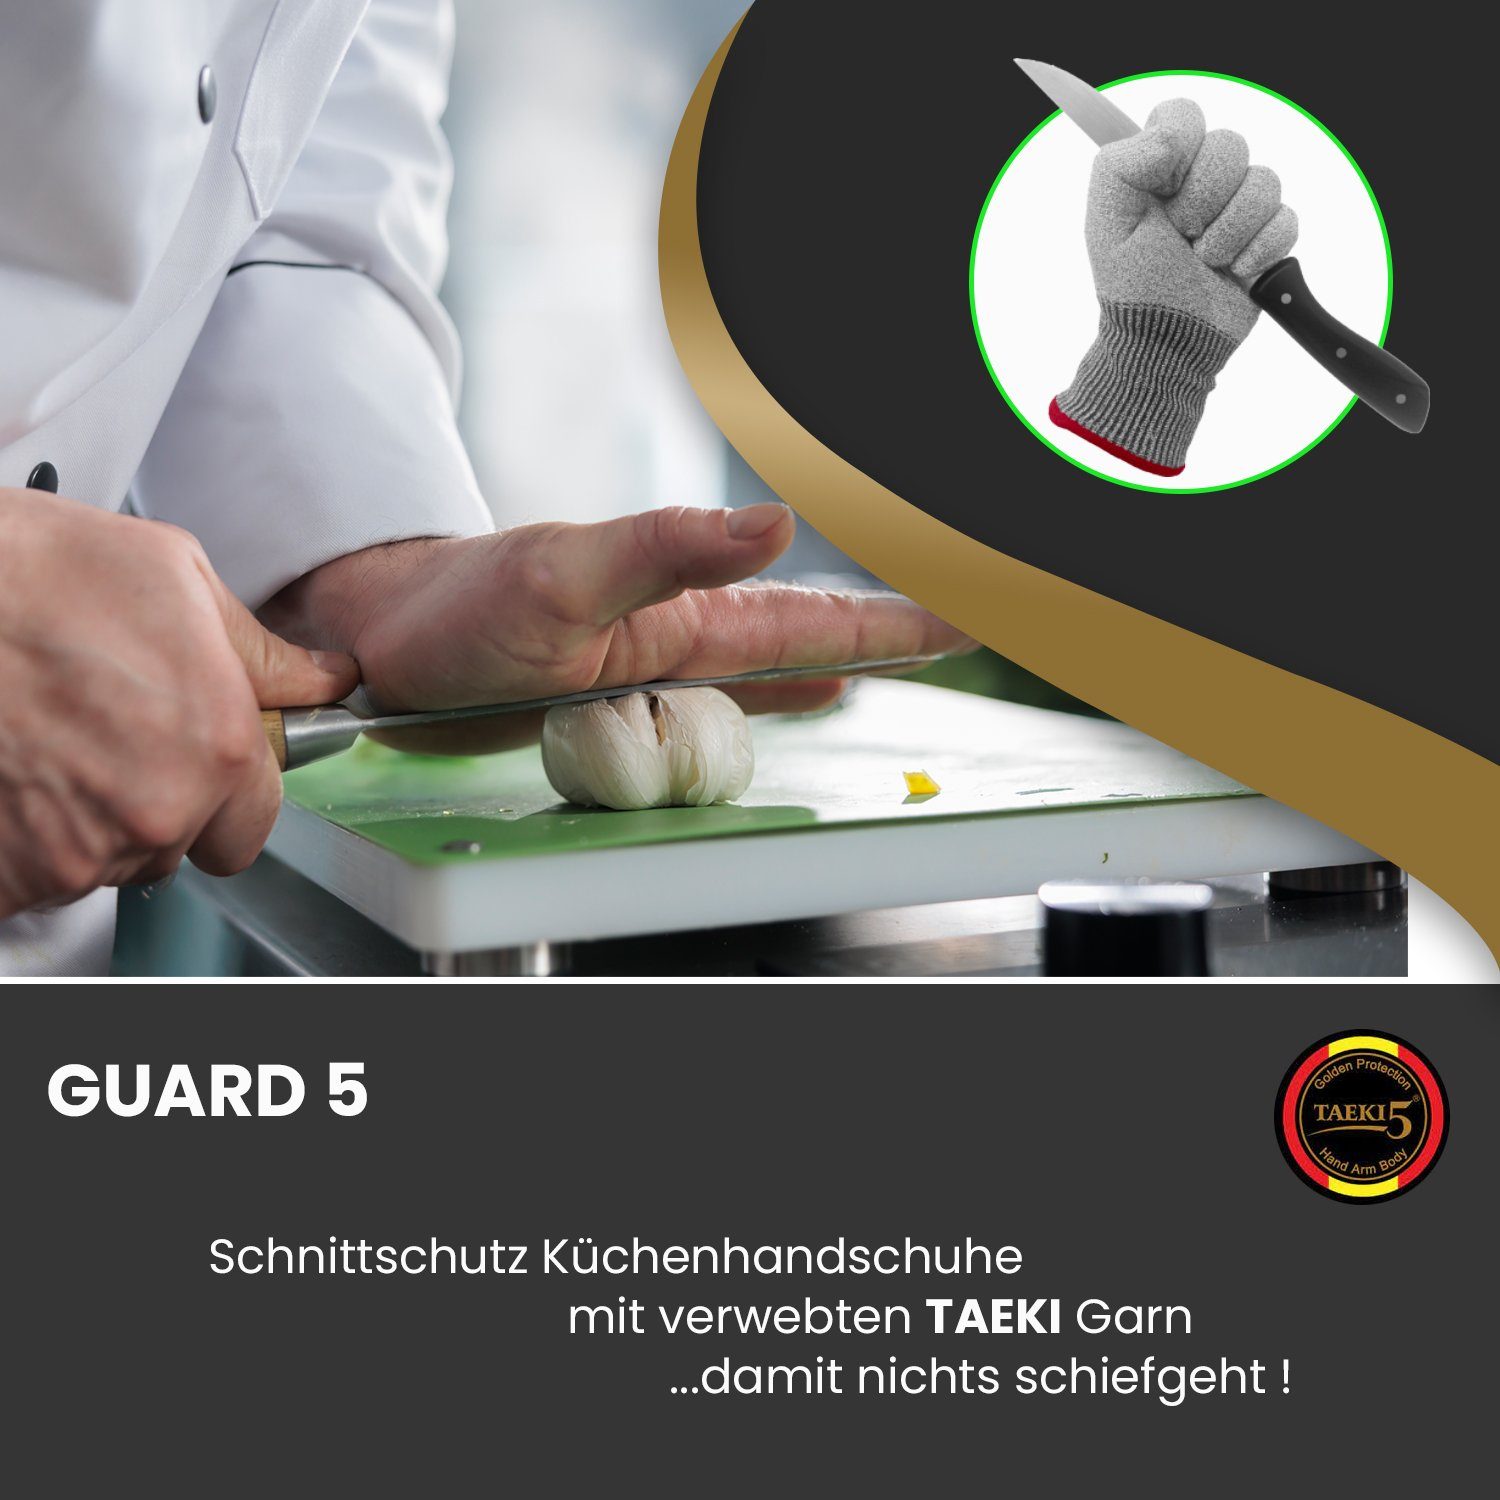 GUARD 5 Schnittschutzhandschuhe Schnittschutzhandschuhe - GUARD Schnittfeste 5 Küchenhandschuhe 116730 -Küchenhandschuhe